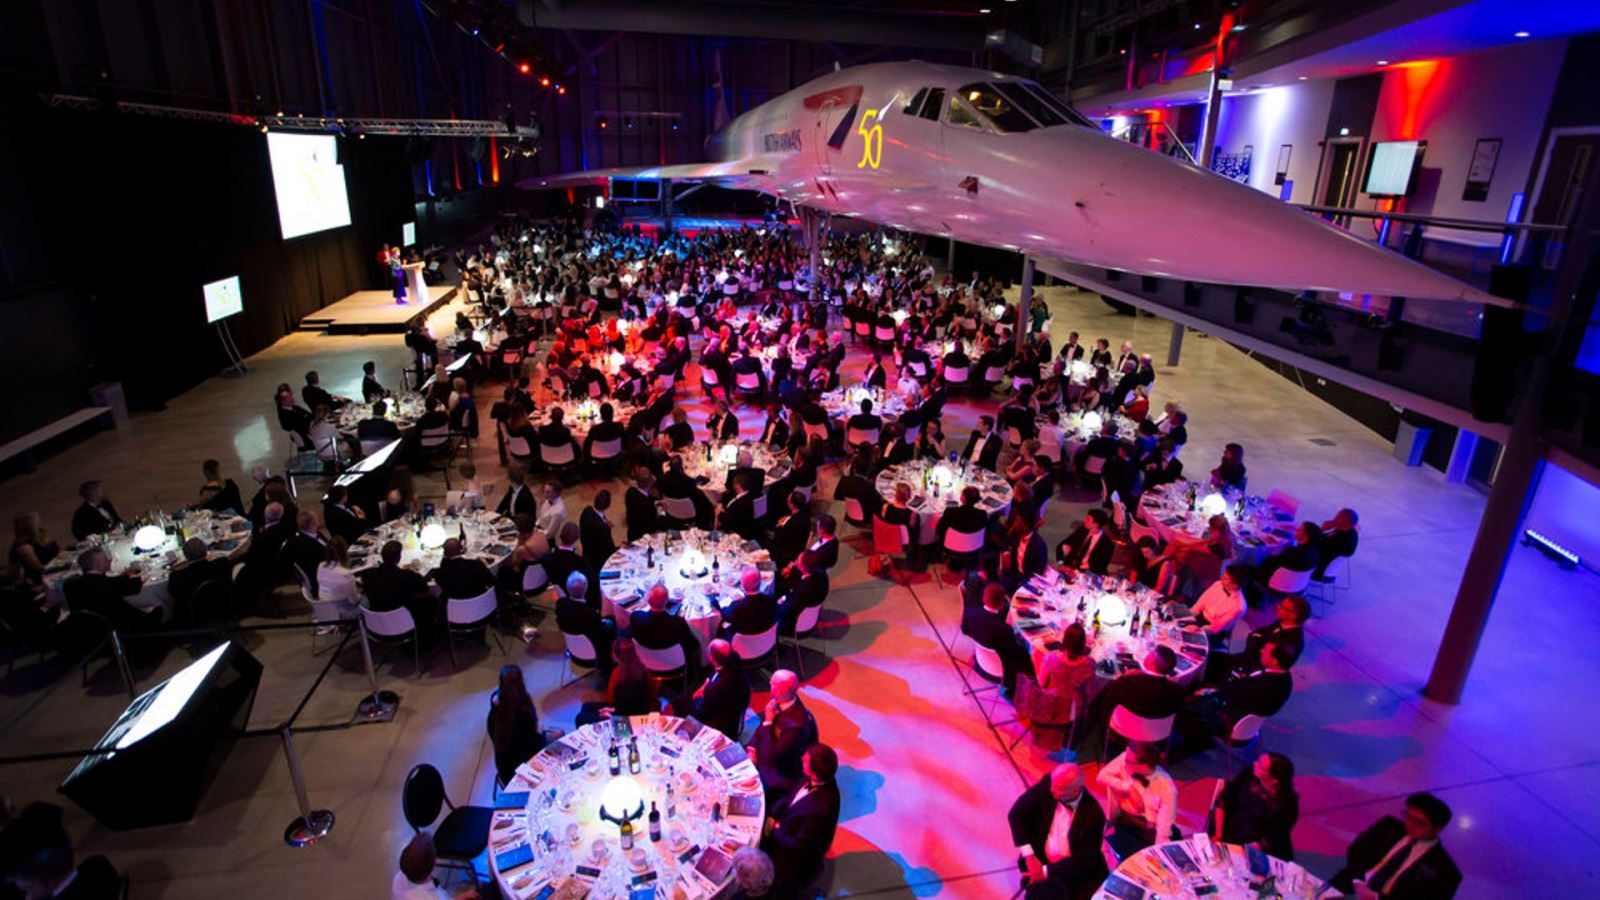 Gala dinner in Concorde Hangar at Aerospace Bristol